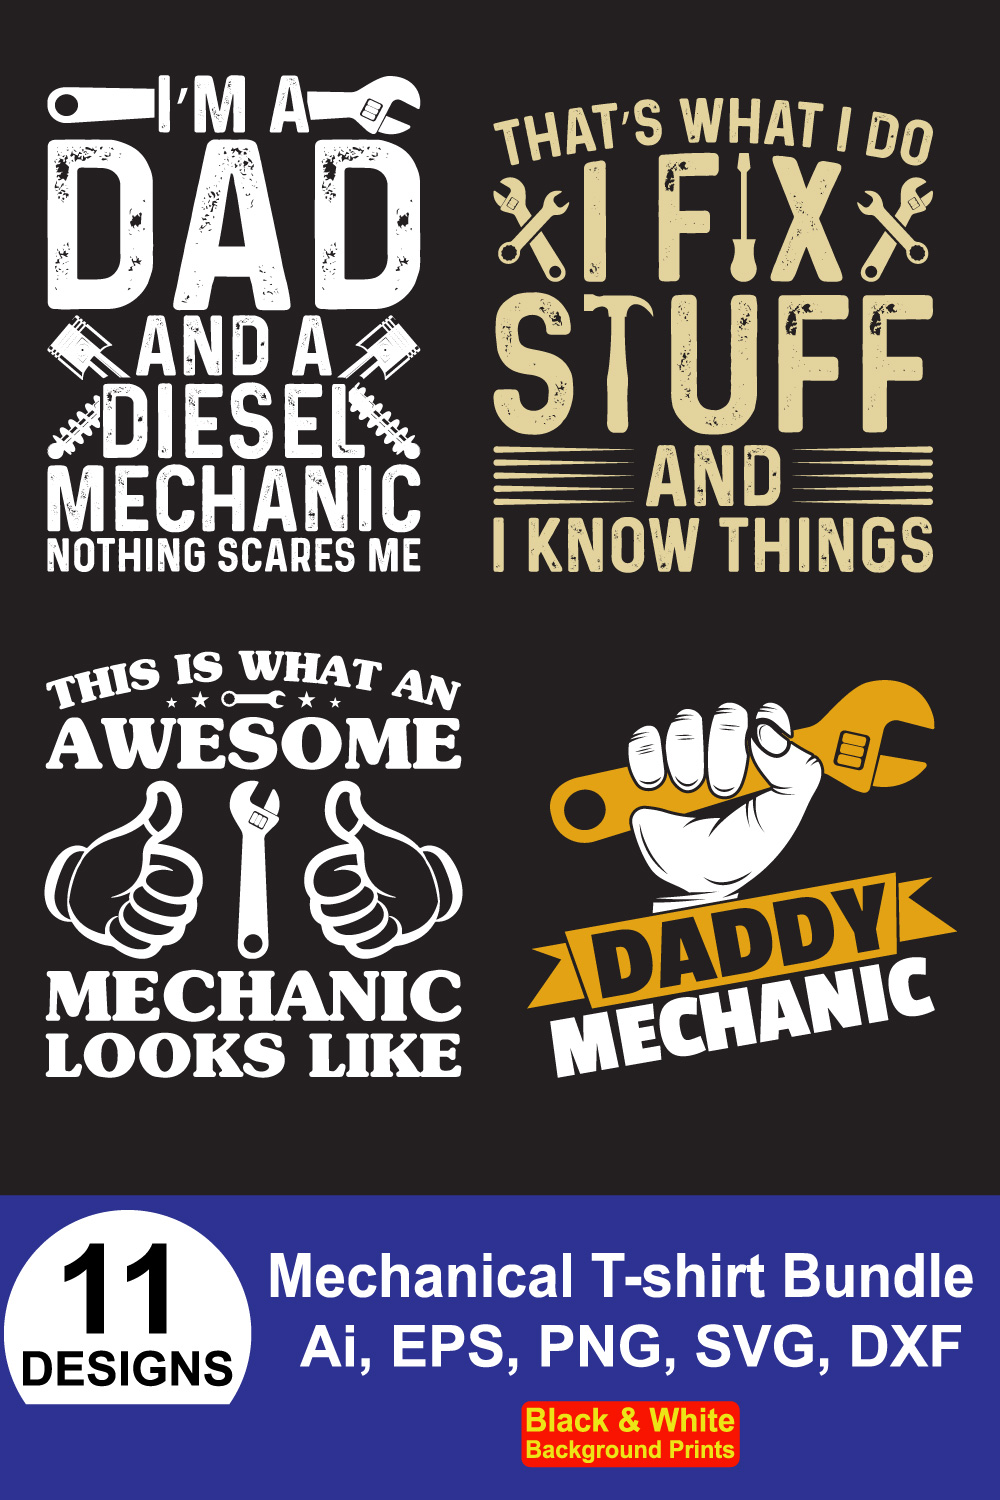 Mechanic Engineering T-shirt Design Pinterest collage image.